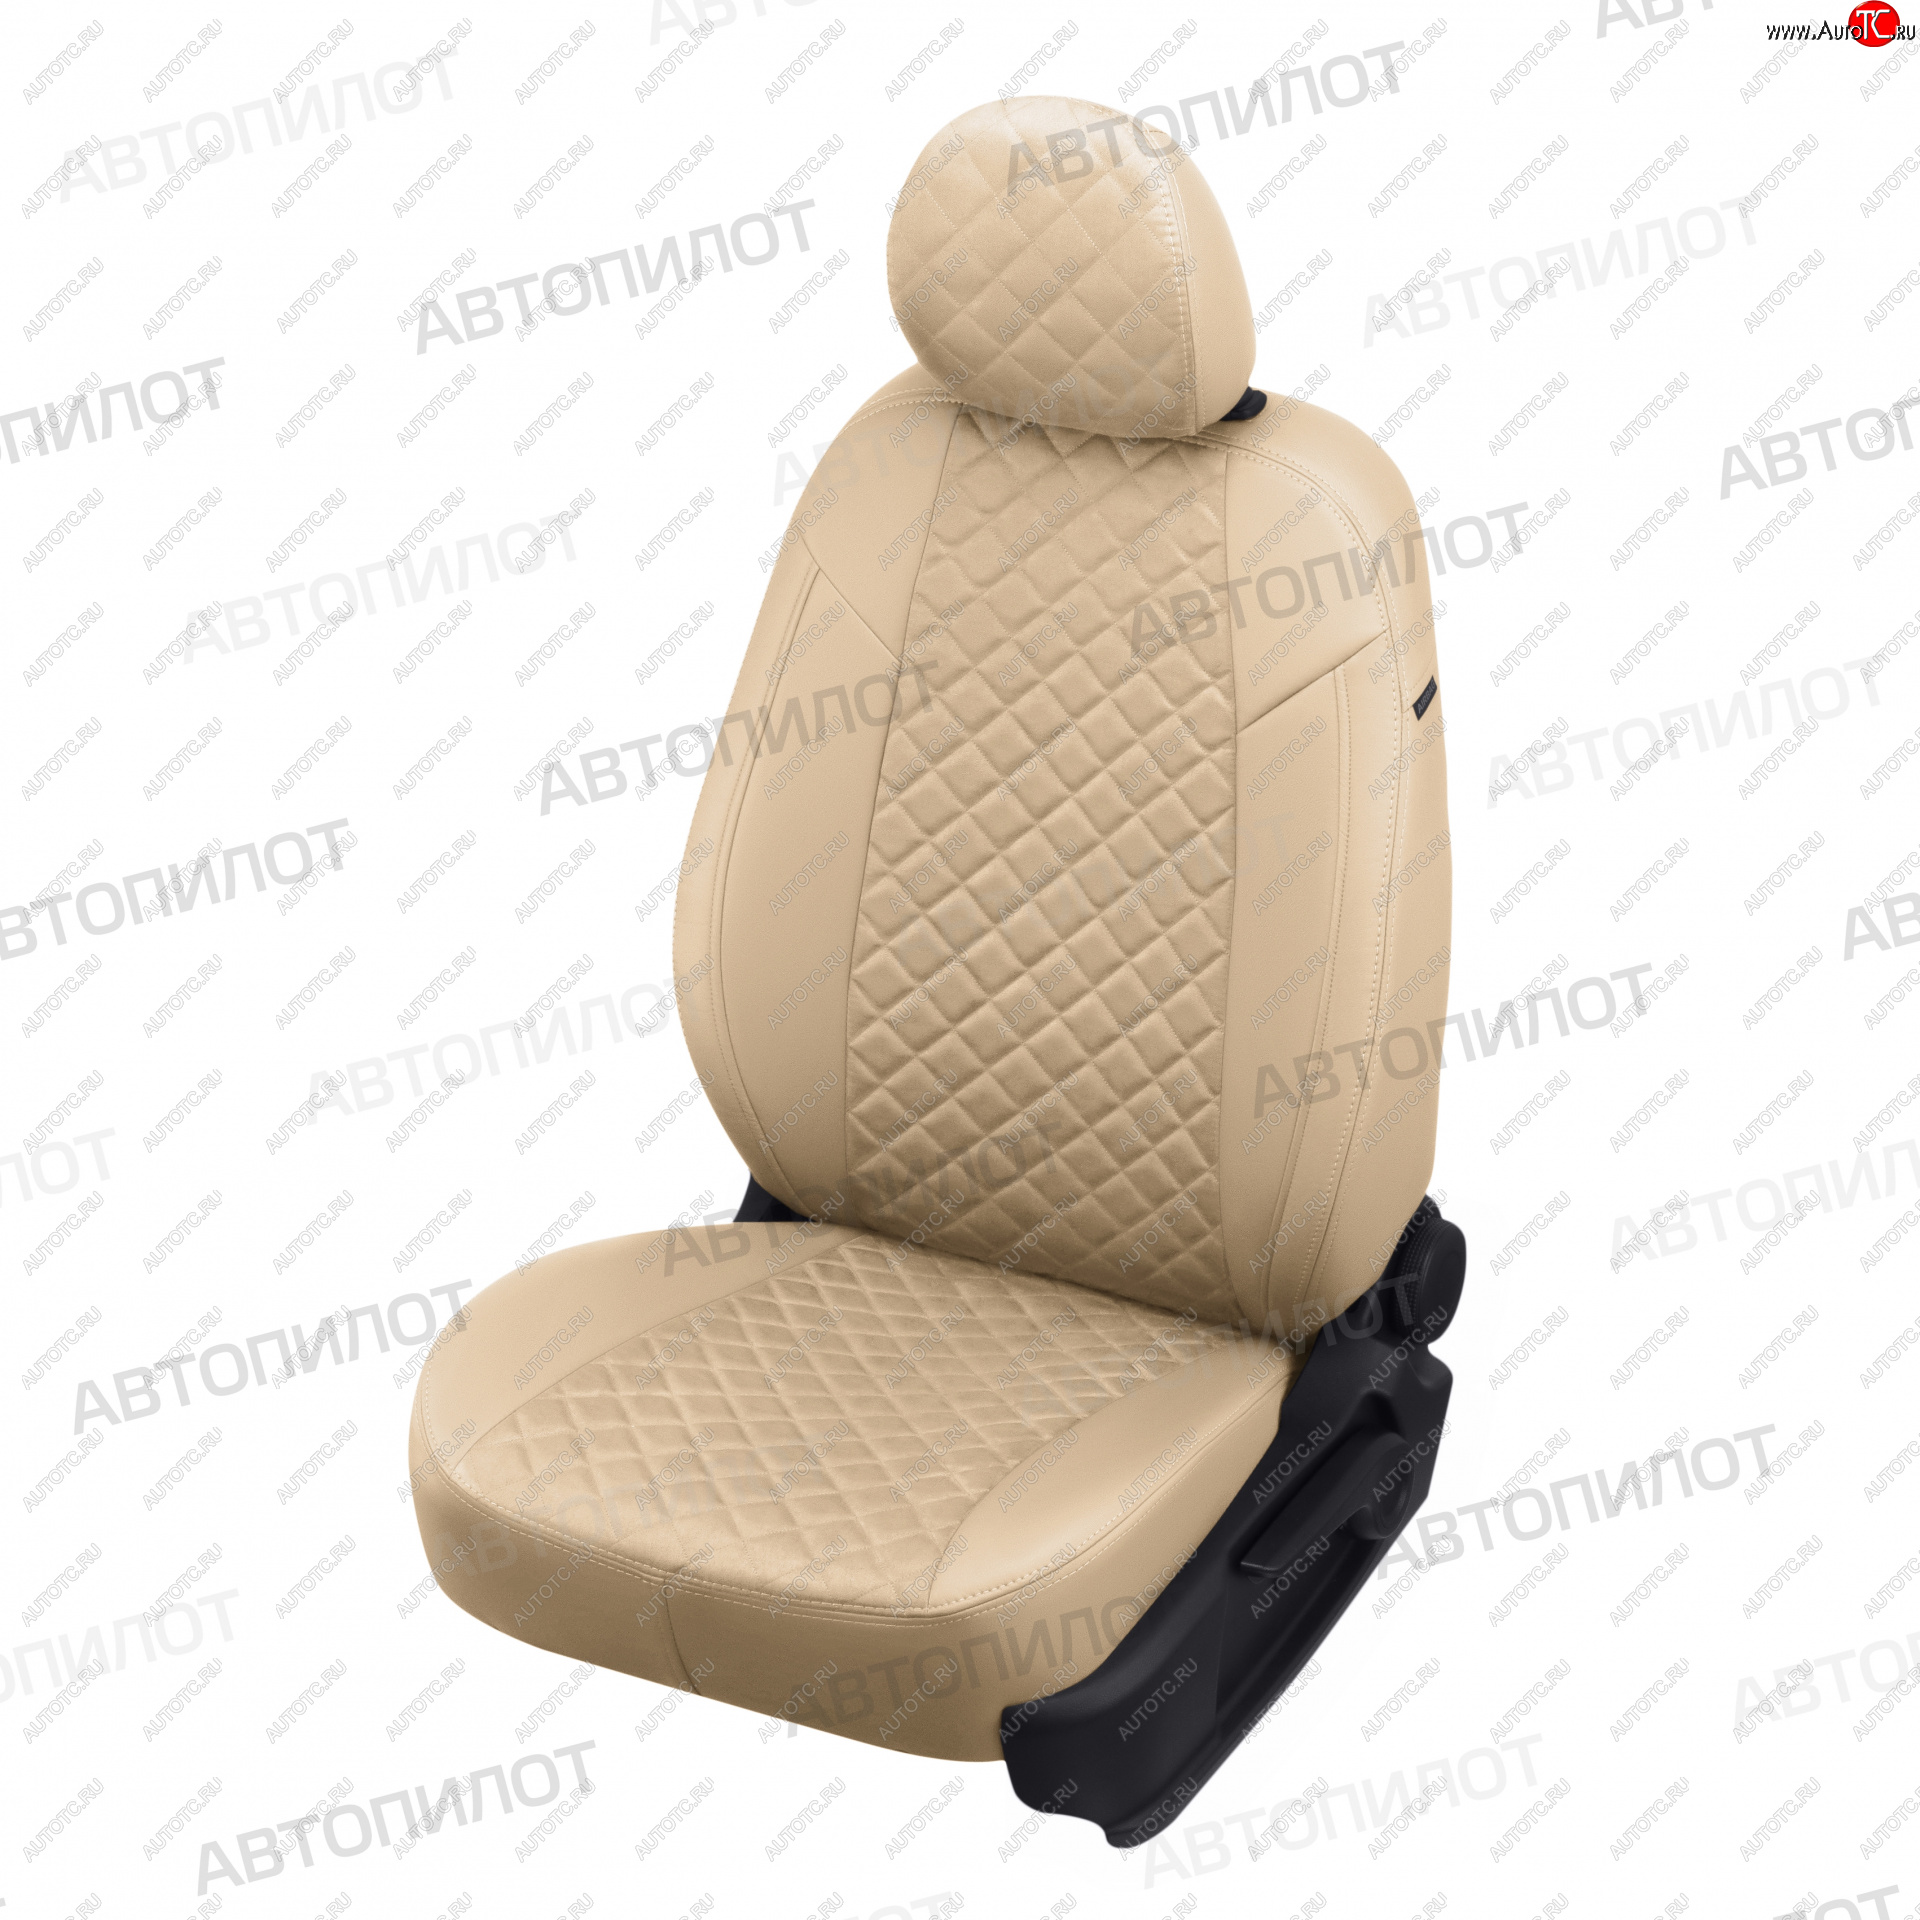 13 999 р. Чехлы сидений (экокожа/алькантара) Автопилот Ромб  Fiat Bravo  198 (2007-2015) (бежевый)